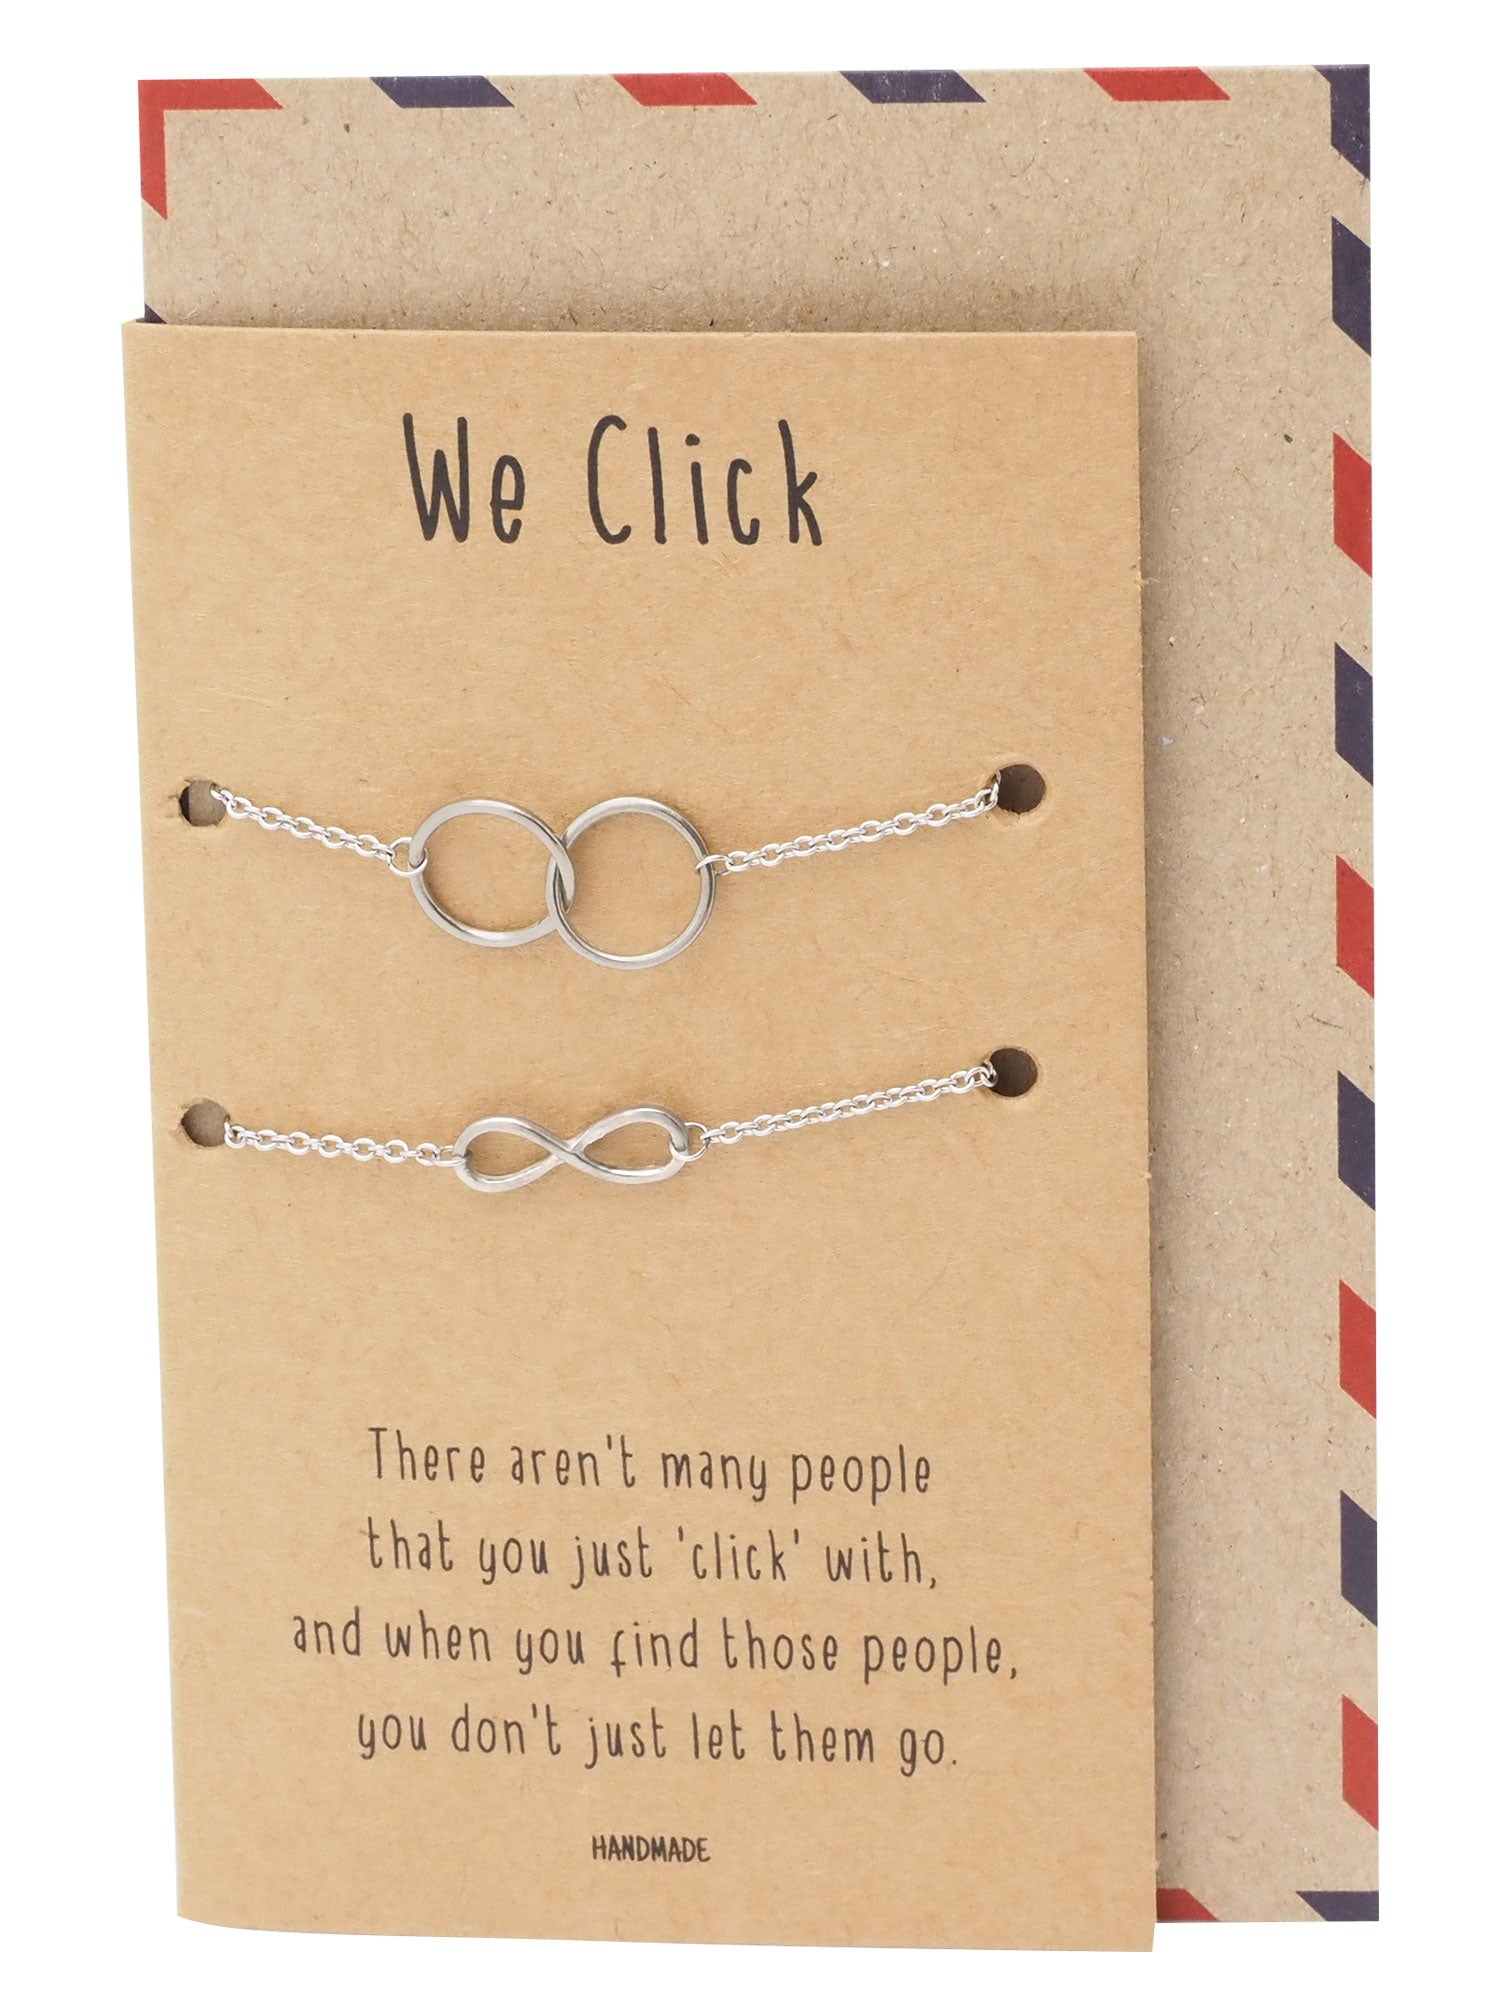 Best Friend Gift Initial Personalized Cat Bracelet Disc Necklace